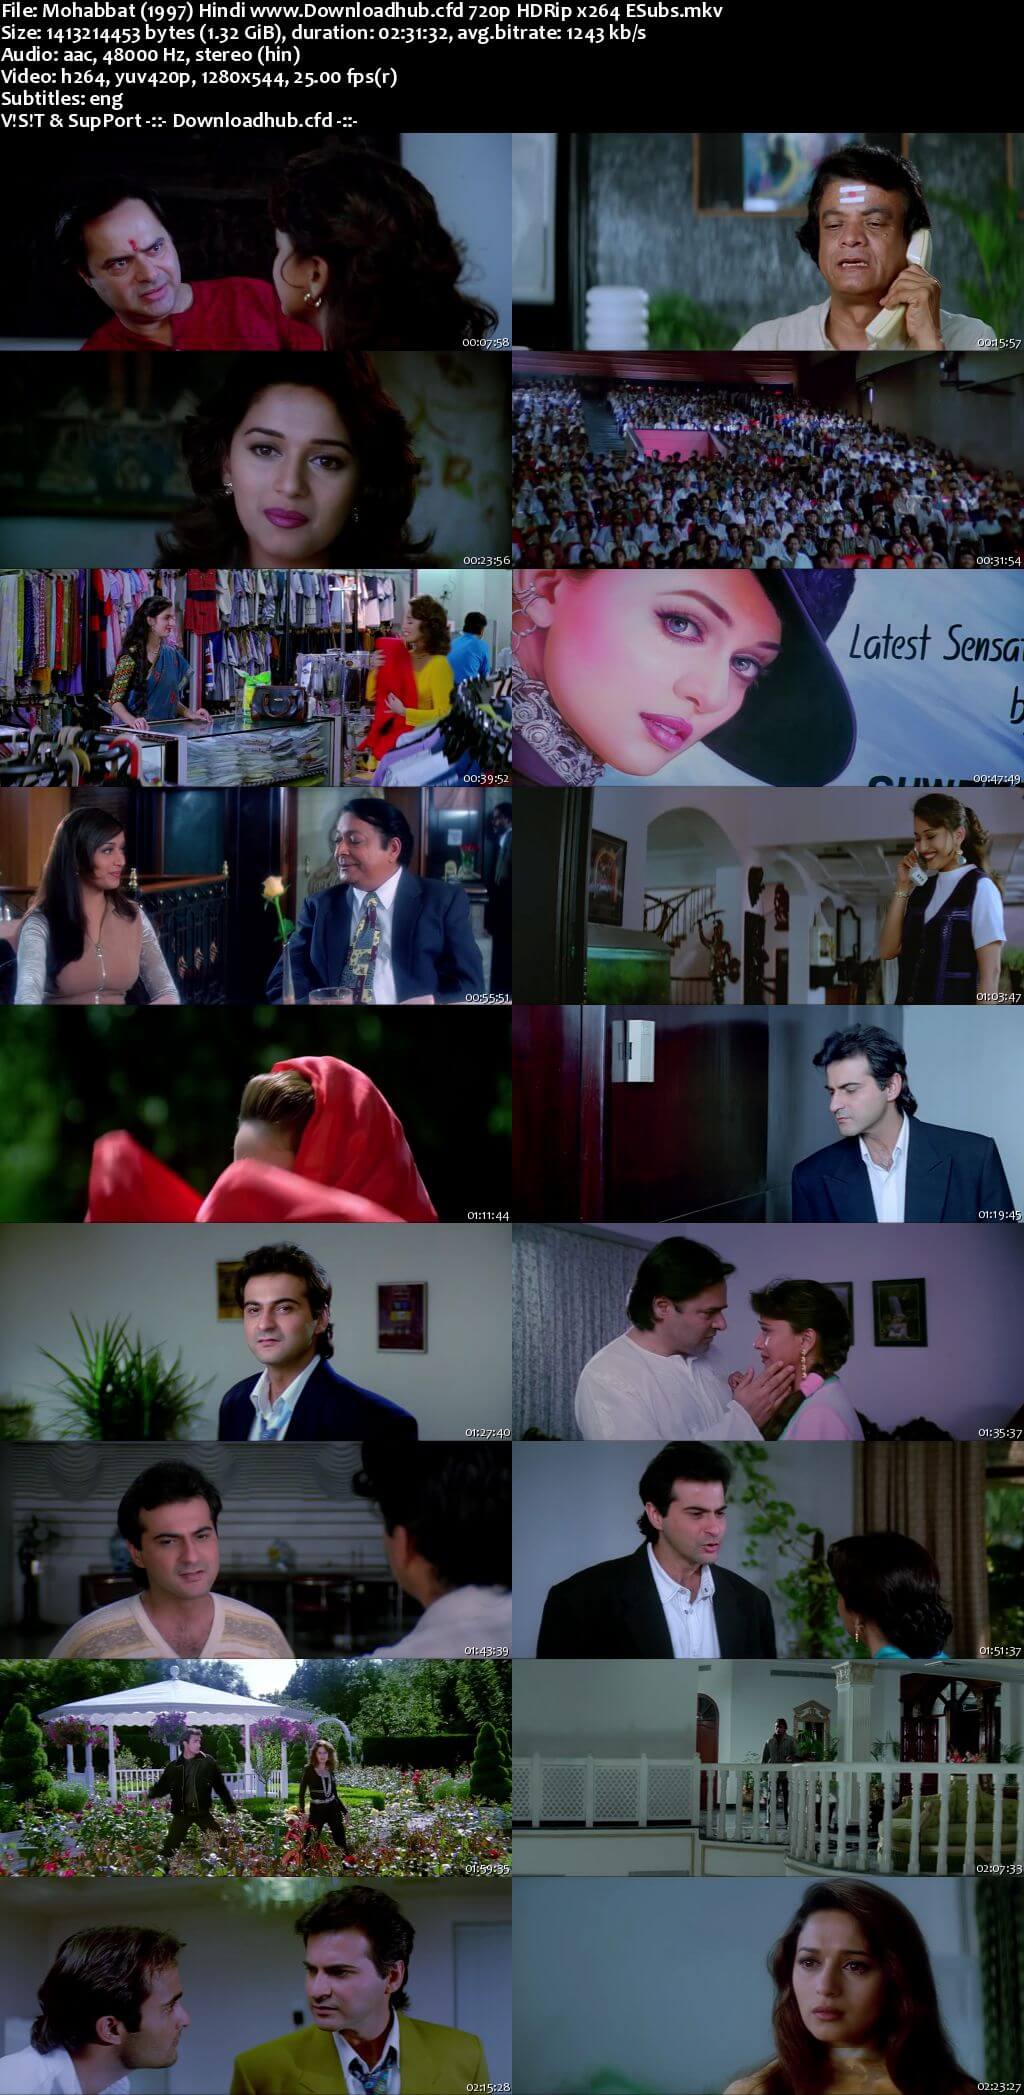 Mohabbat 1997 Hindi 720p HDRip ESubs